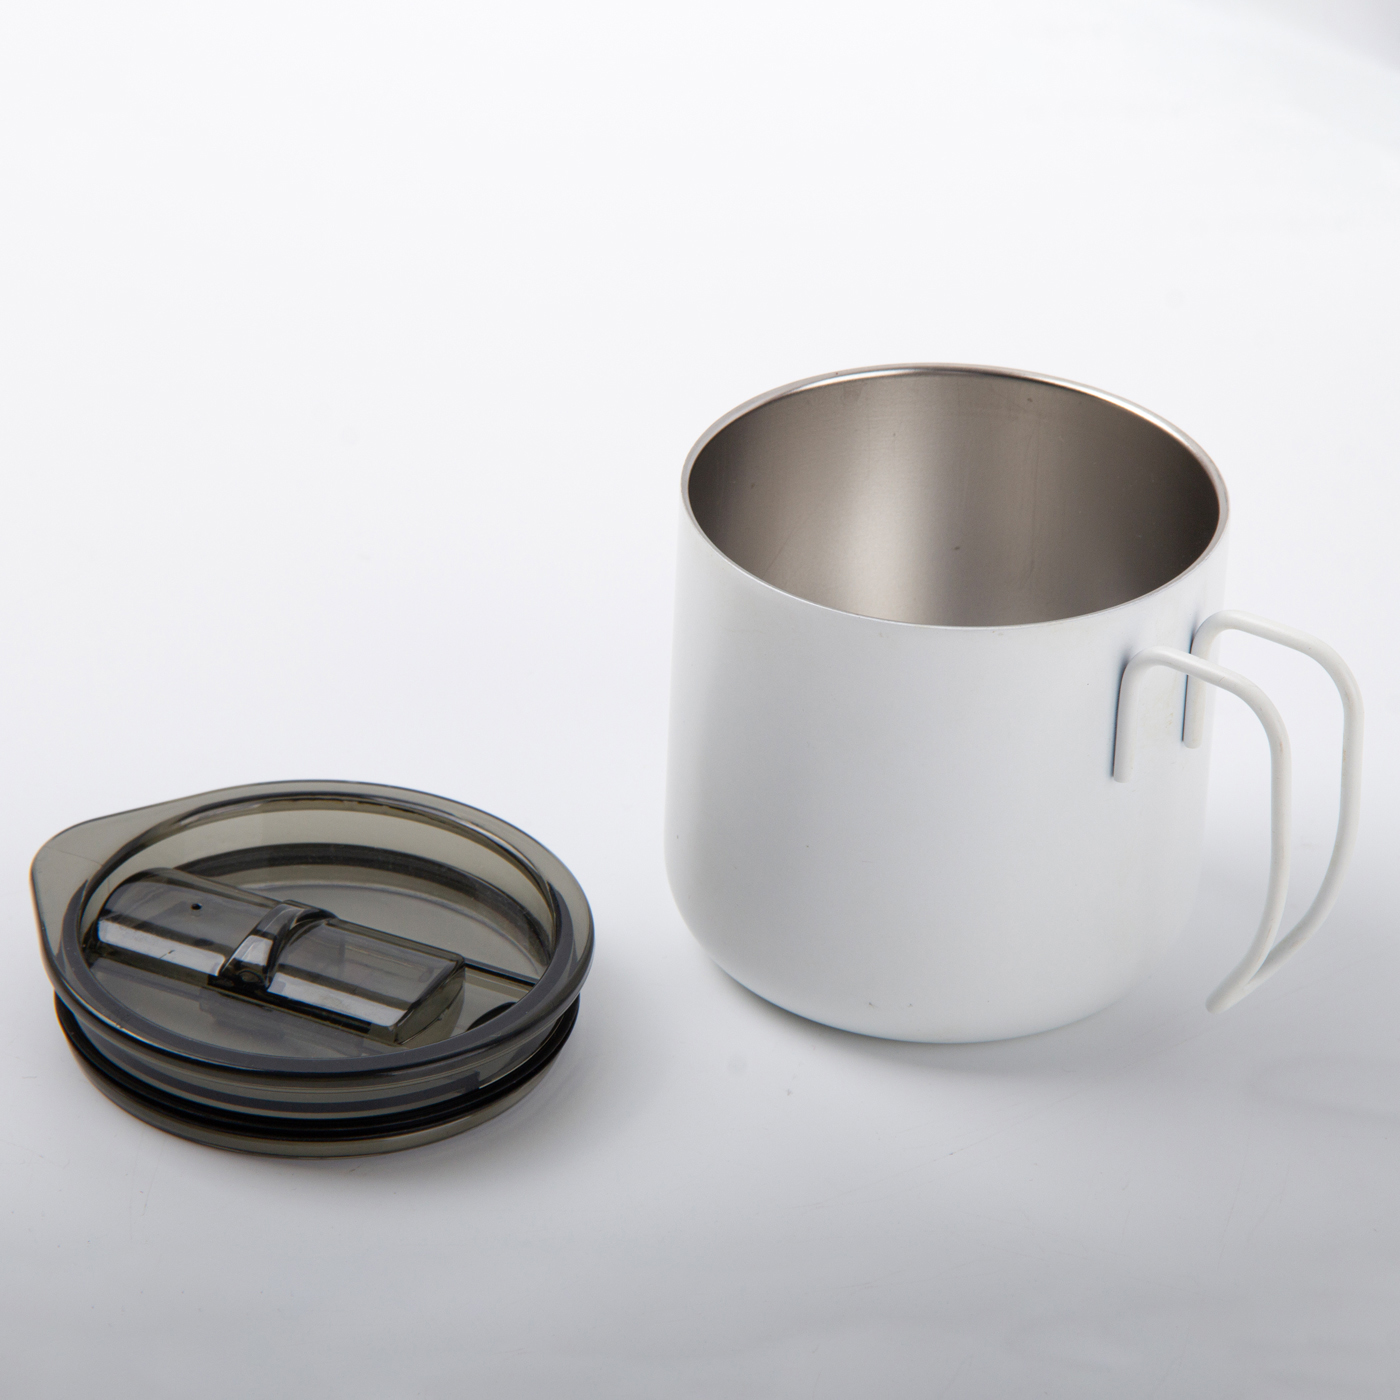 12 oz. Stainless Steel Coffee Mug With Handle3